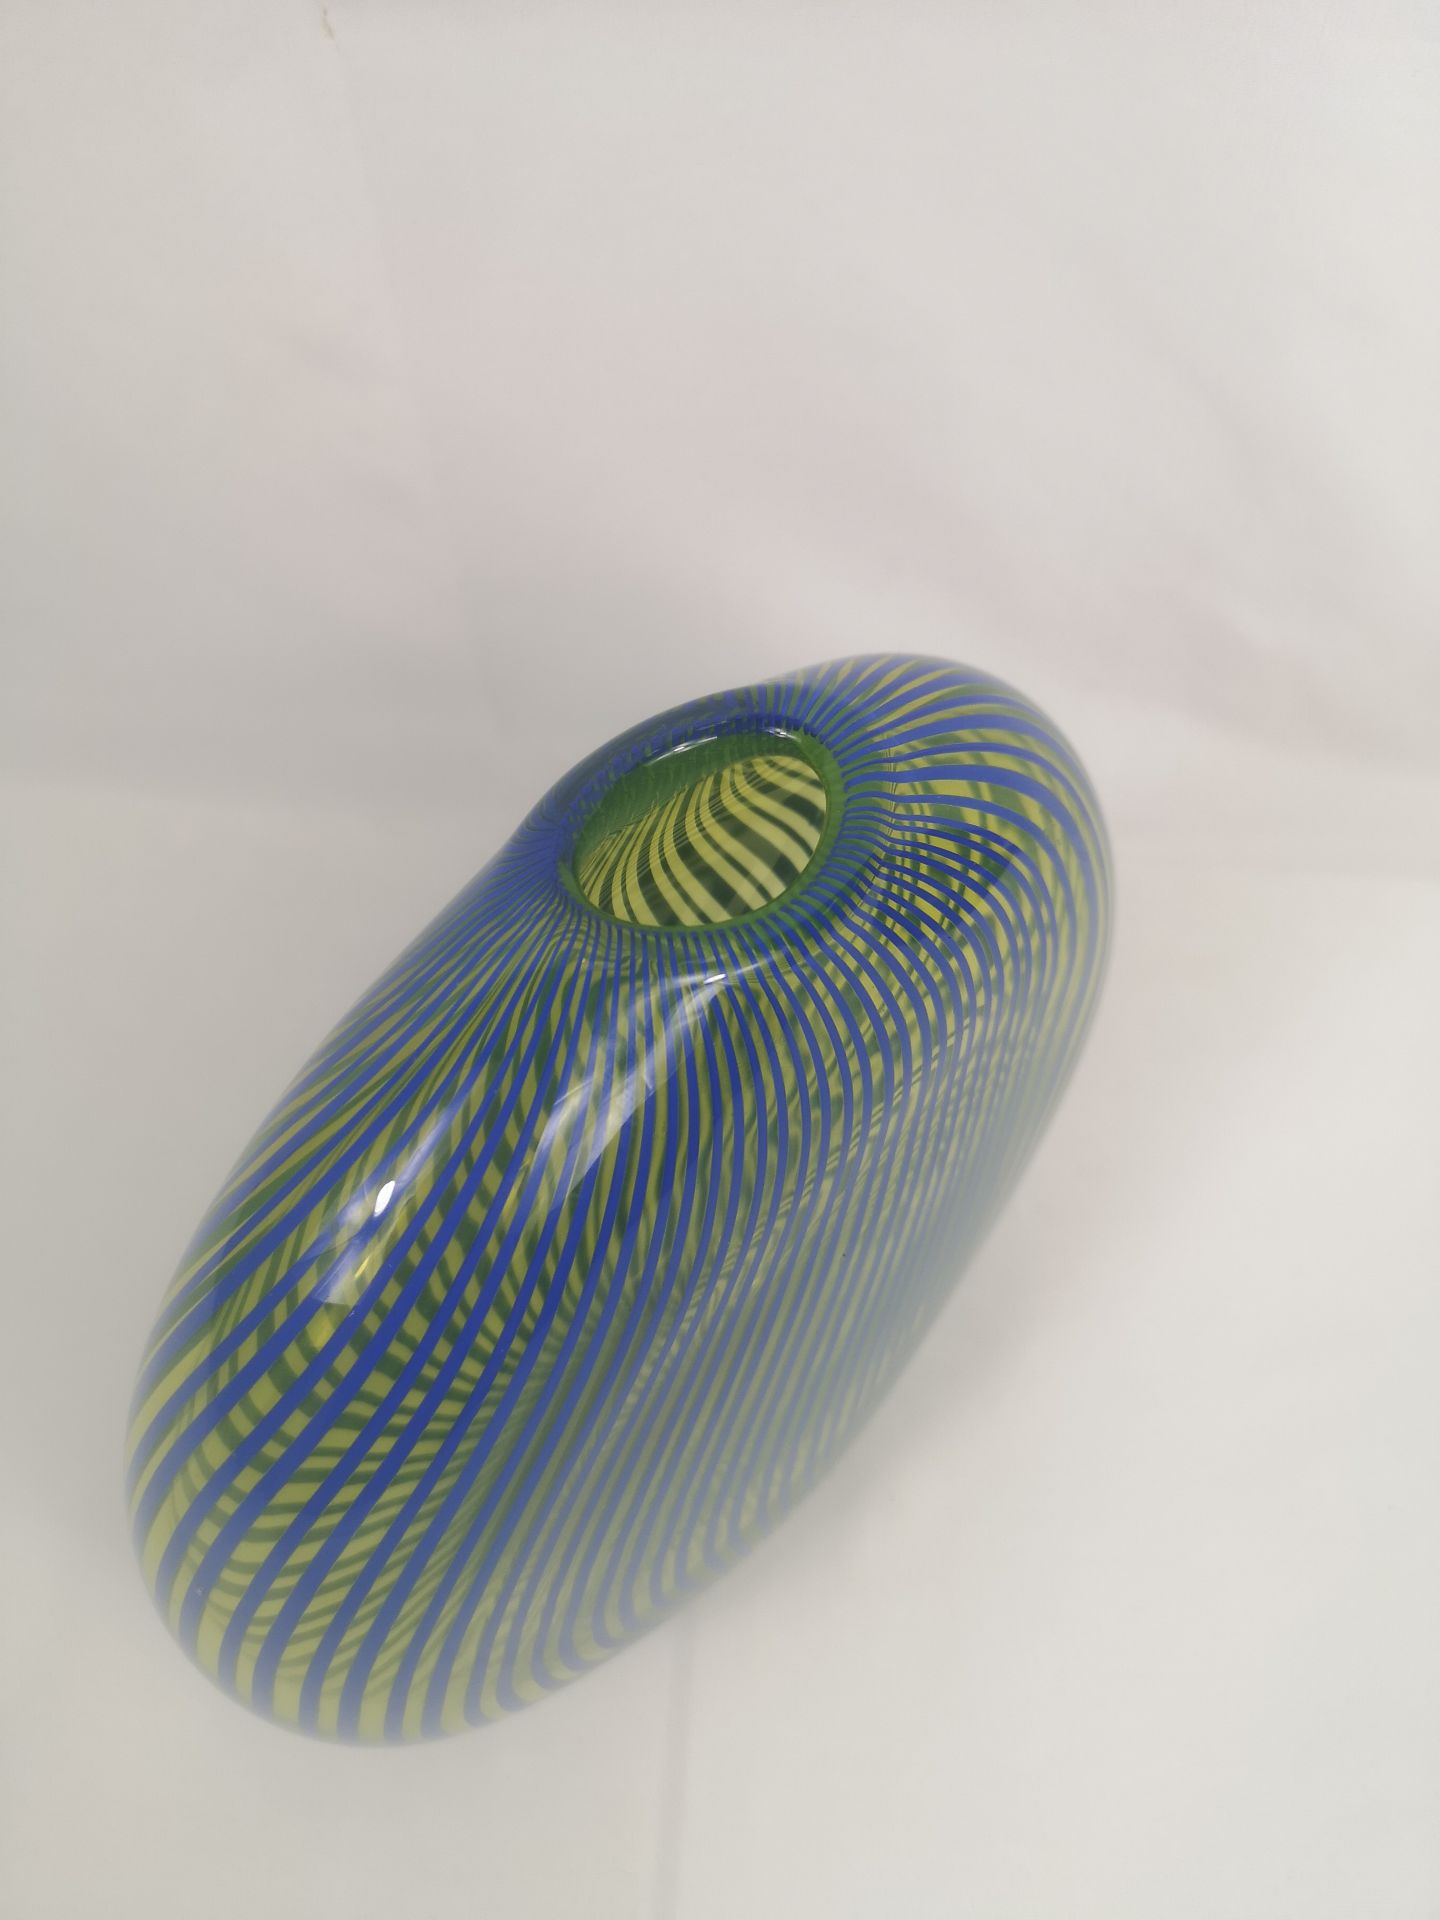 Peter Secrest art glass vase - Bild 3 aus 5